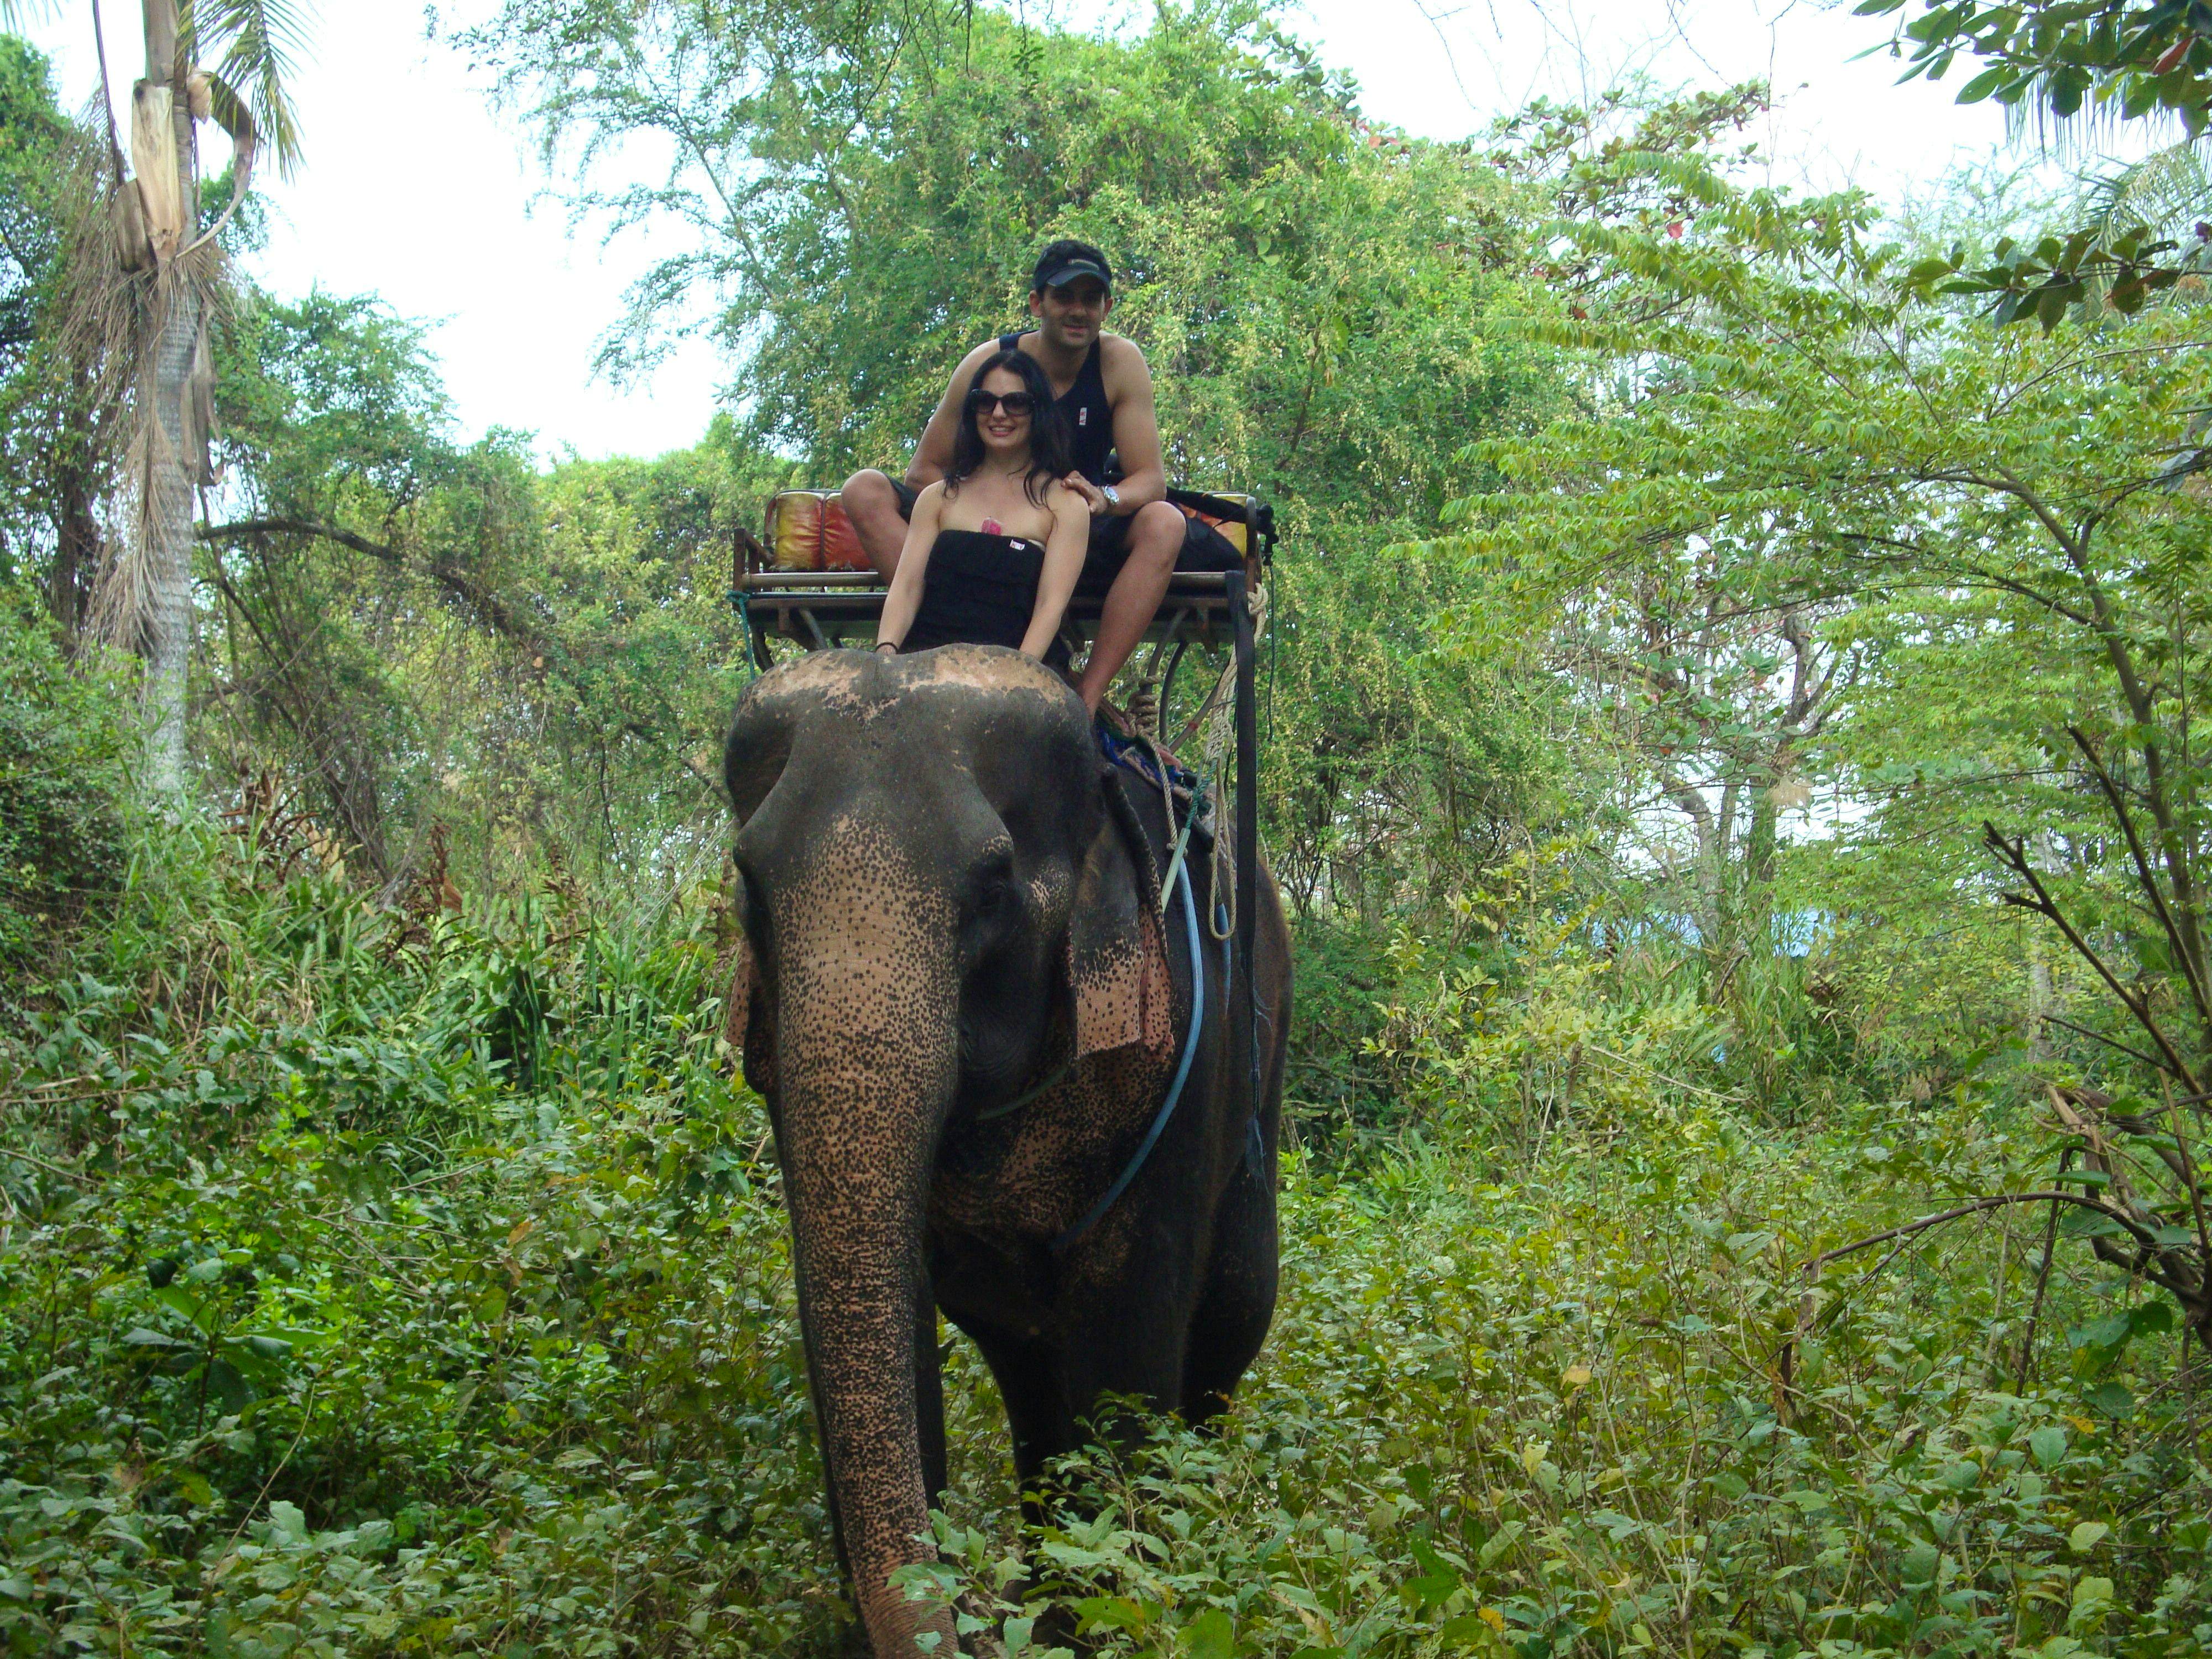 Phuket-Bareback Elephant Riding Only 45 mins - Shared Transfers (C2)  (Pick up for hotels in Patong, Kata, Karon & Kamala)